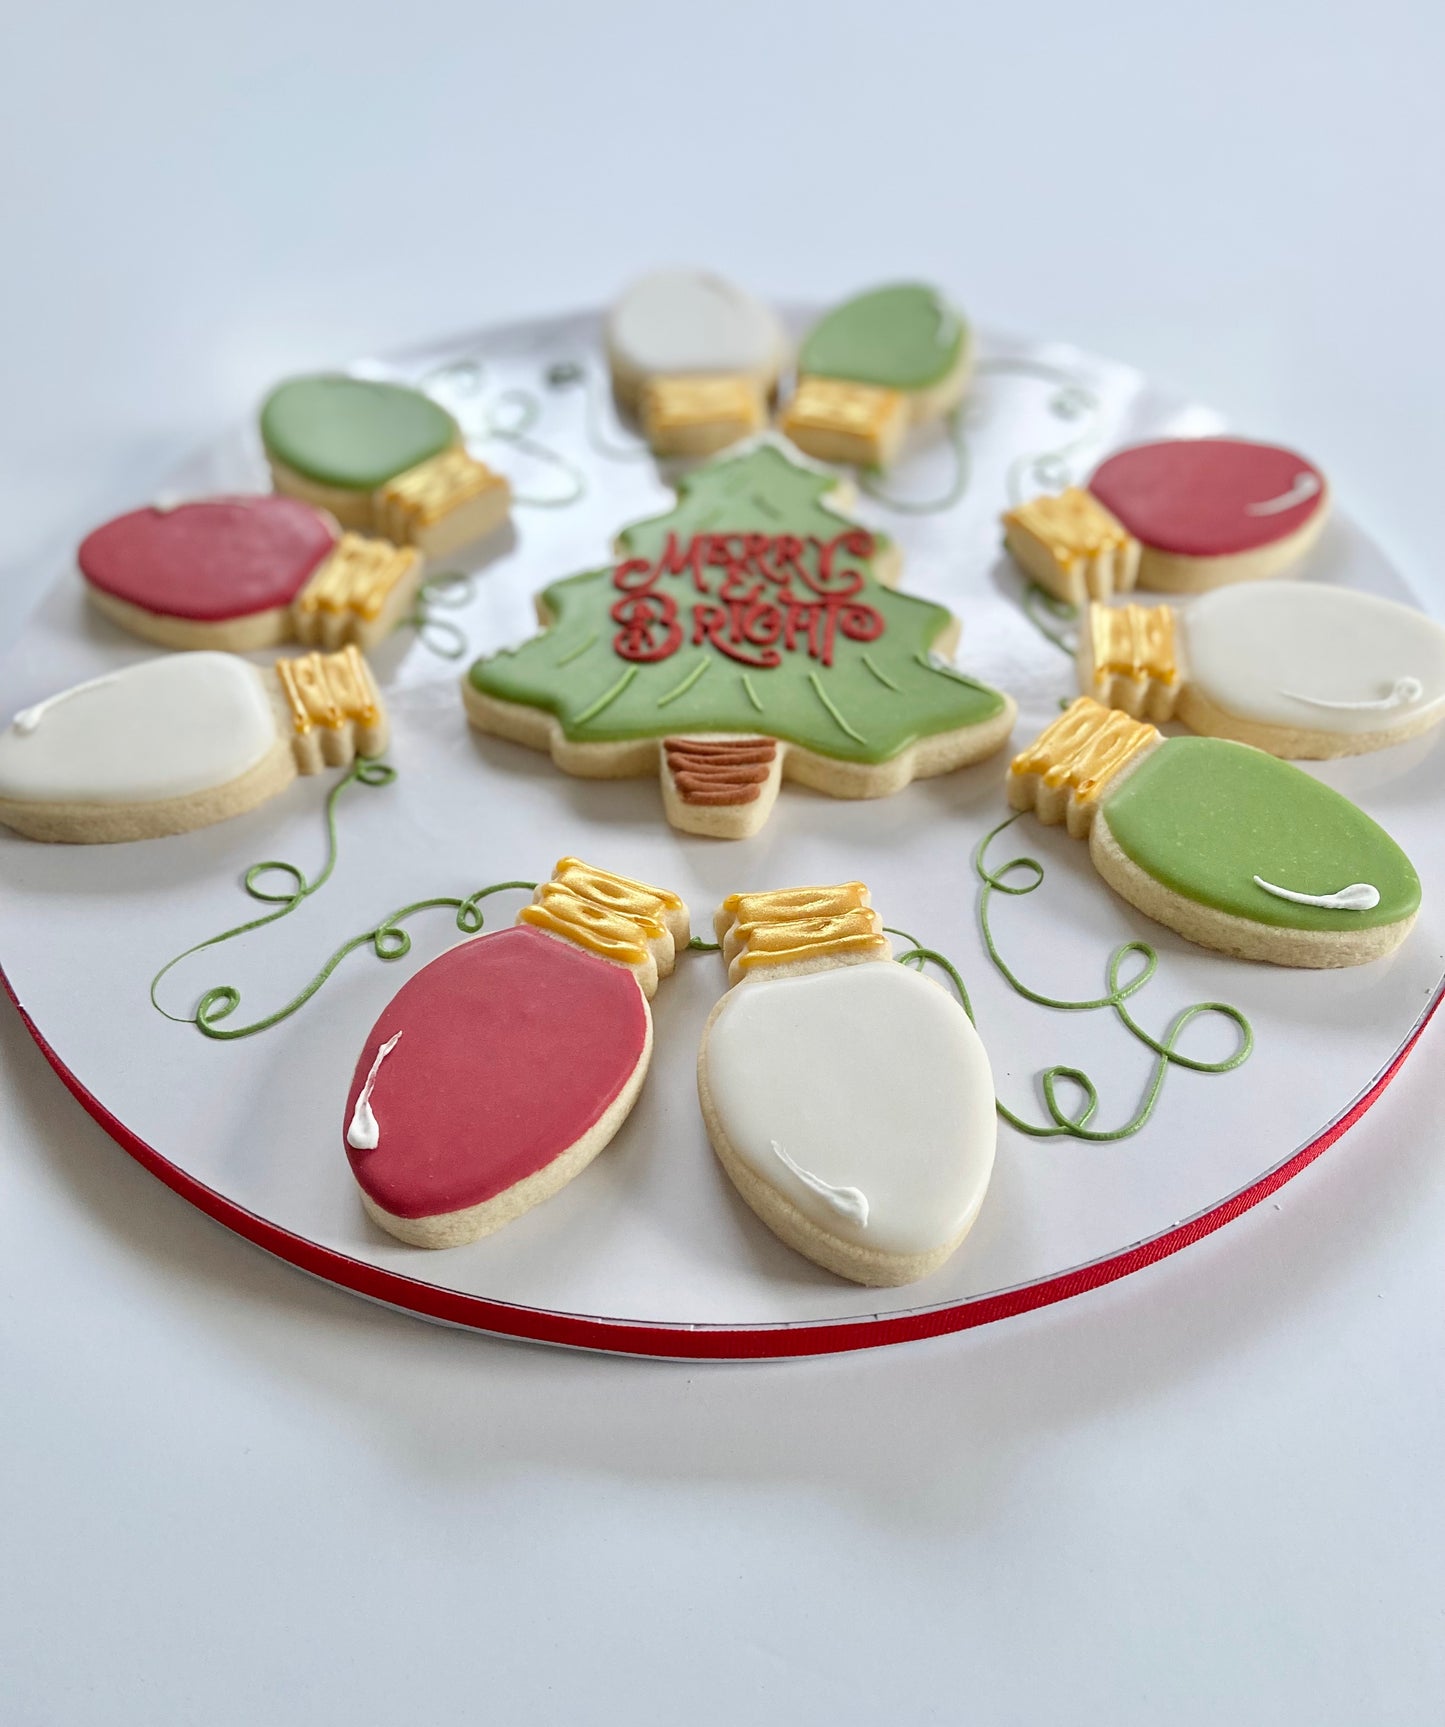 Merry & Bright Cookie Platter